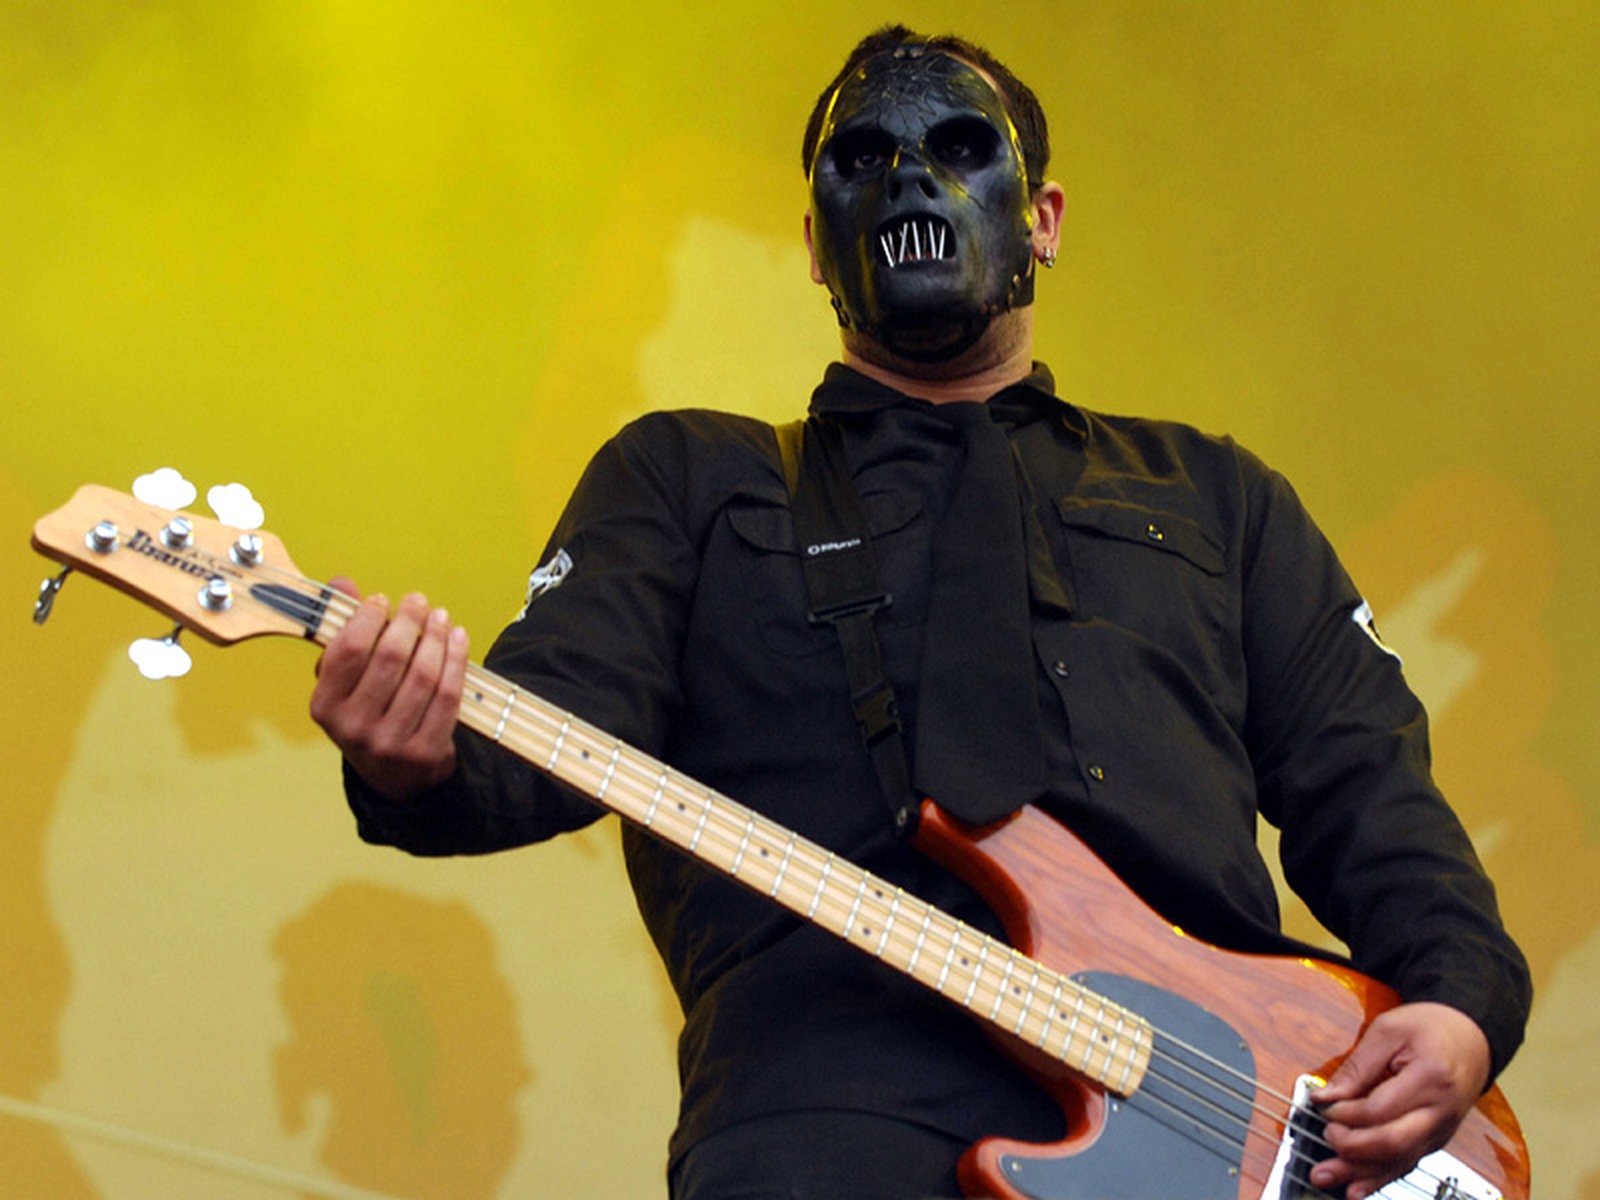 Paul bass. Бас гитарист Slipknot. Басист слипкнот пол грей. Басист слипкнот.